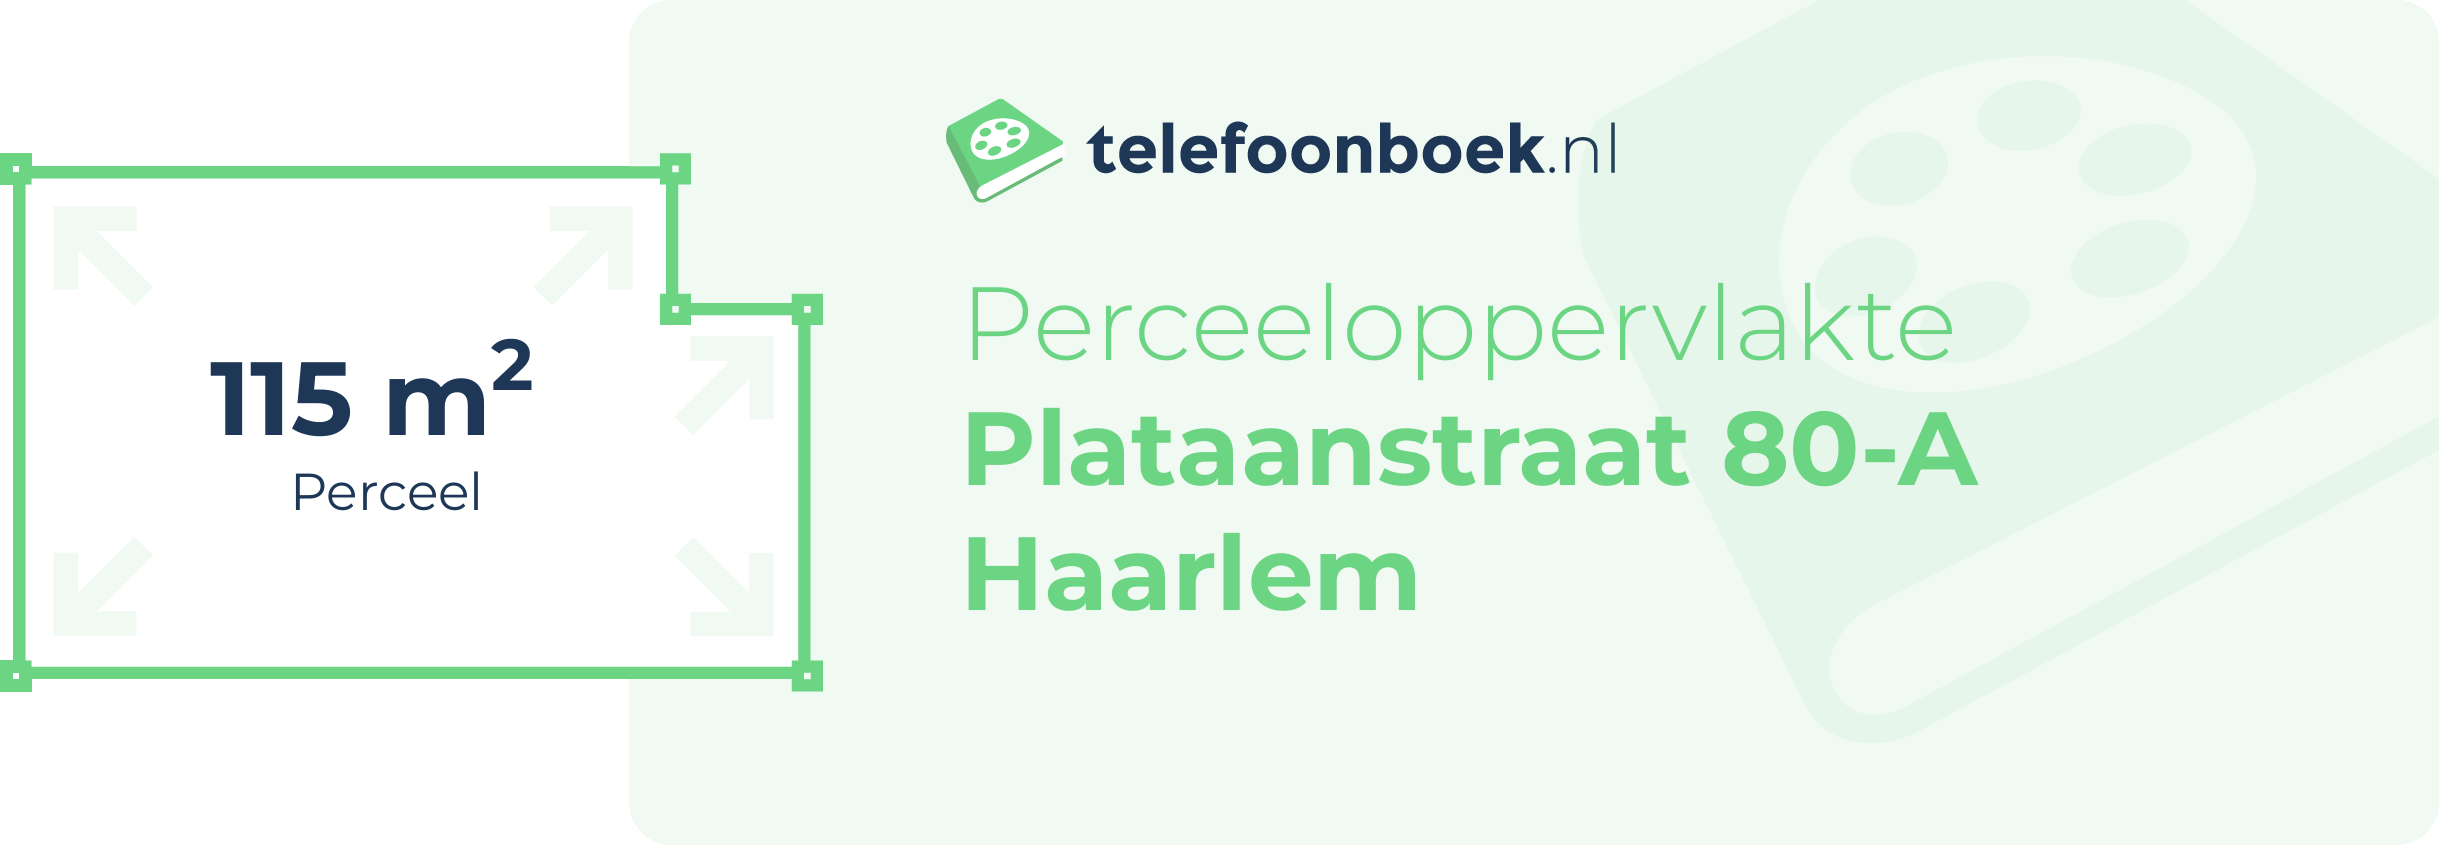 Perceeloppervlakte Plataanstraat 80-A Haarlem